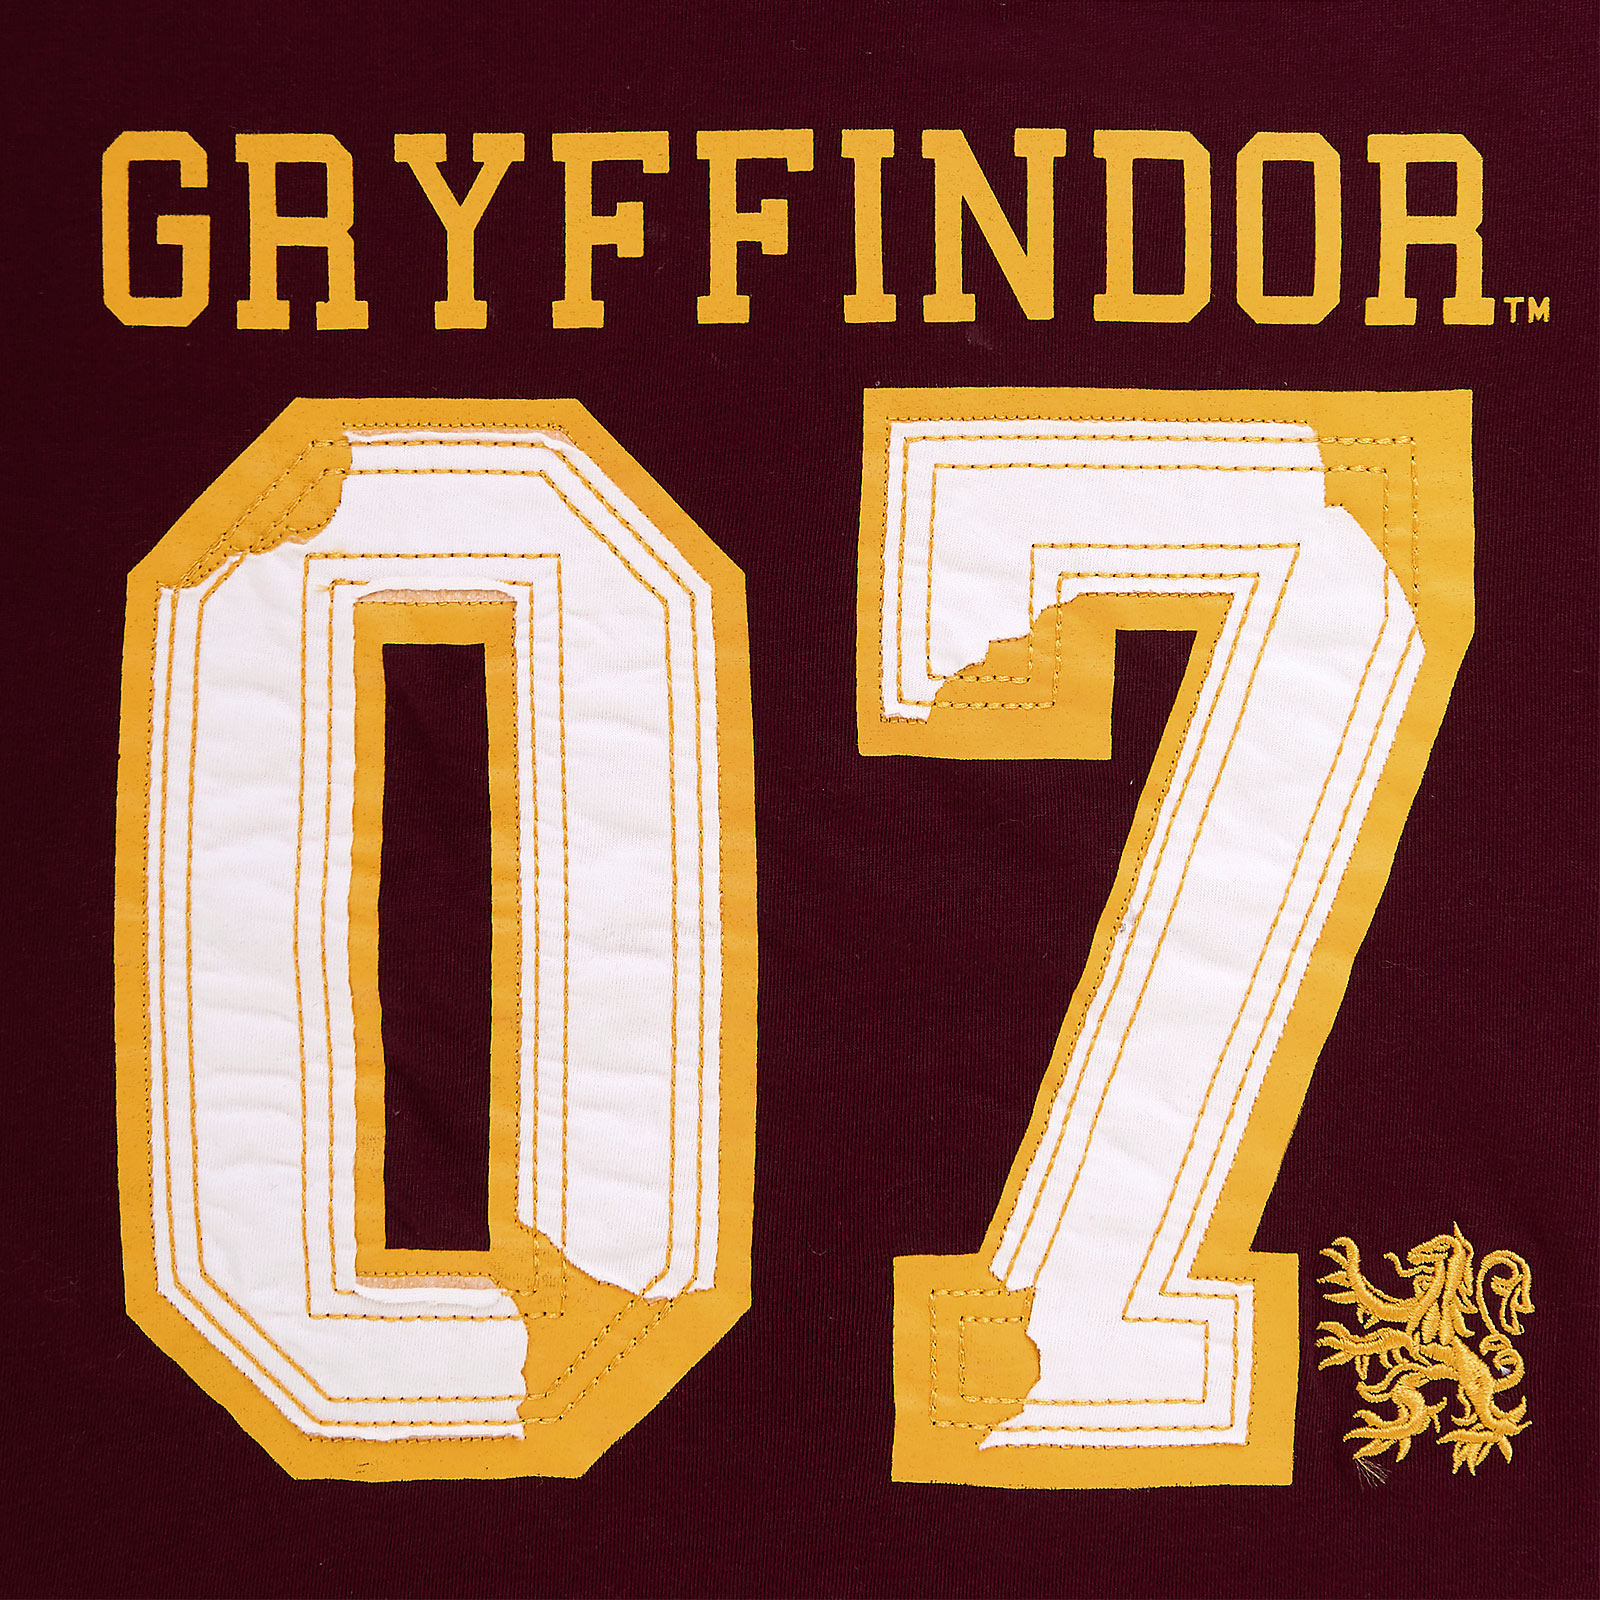 Harry Potter Gryffindor Zoeker T-Shirt Rood